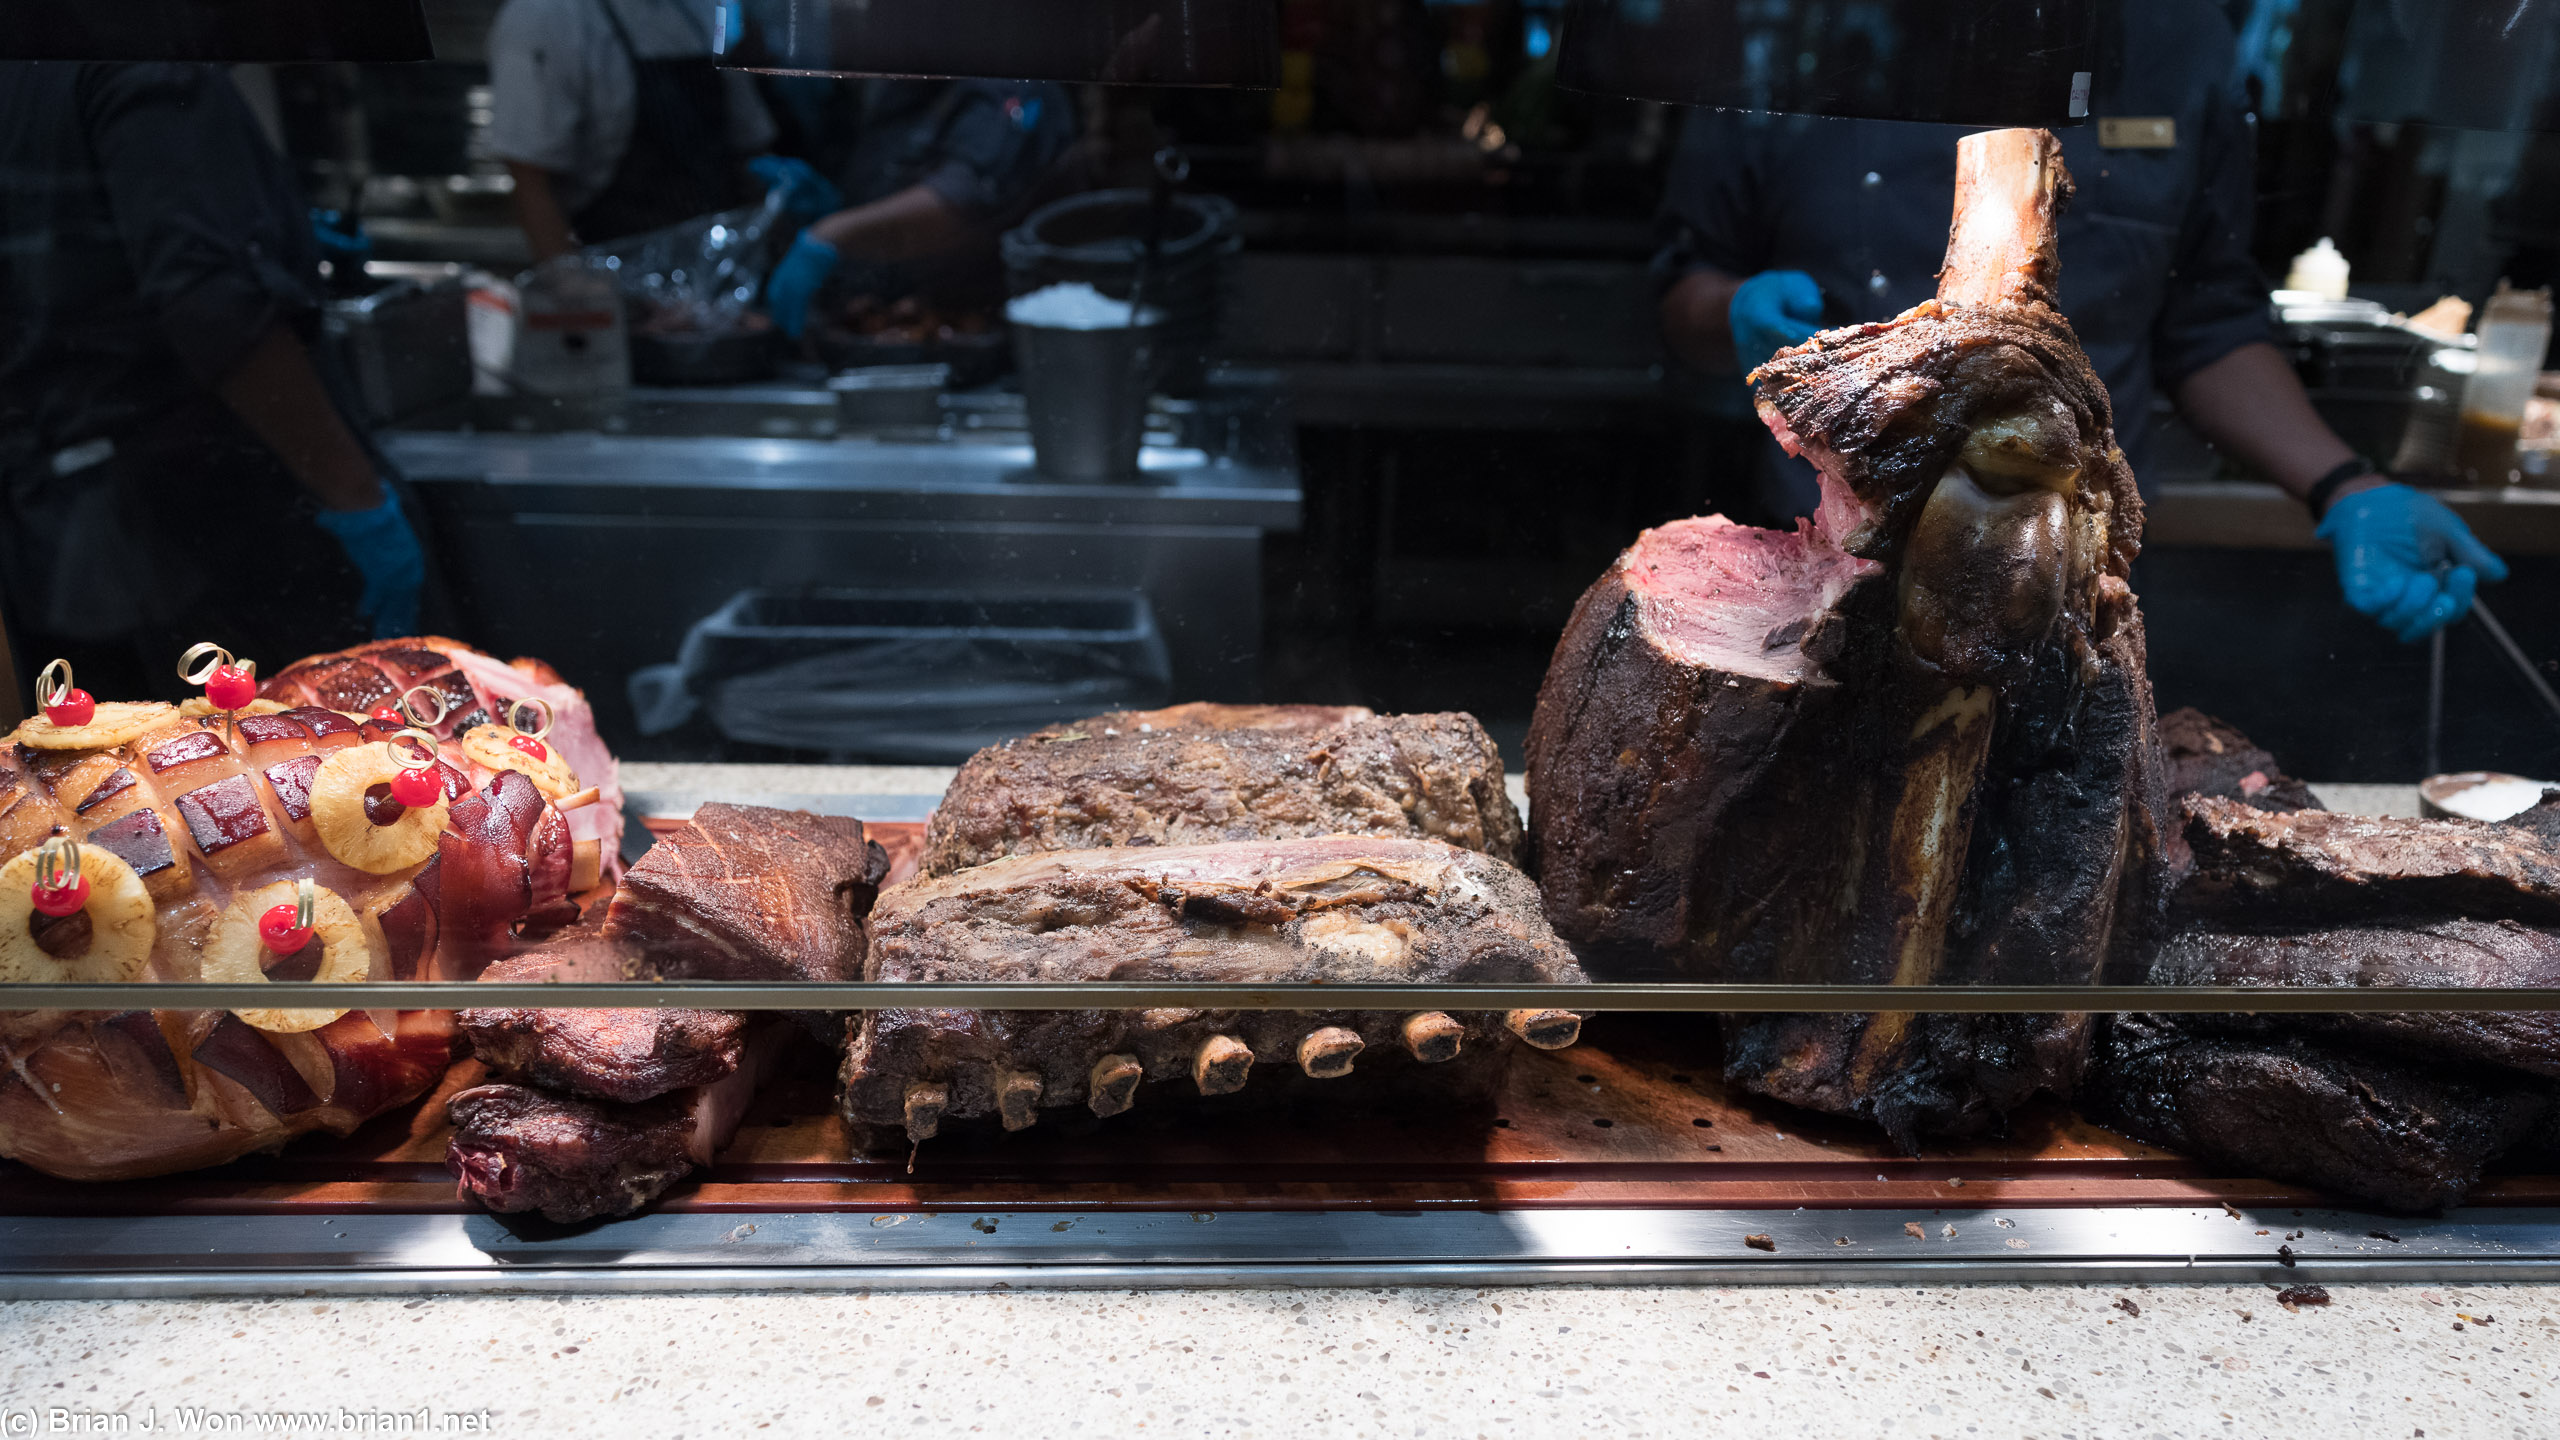 Carving station (1 of 2). Ham, pork belly, ribs, waygu roast beef....